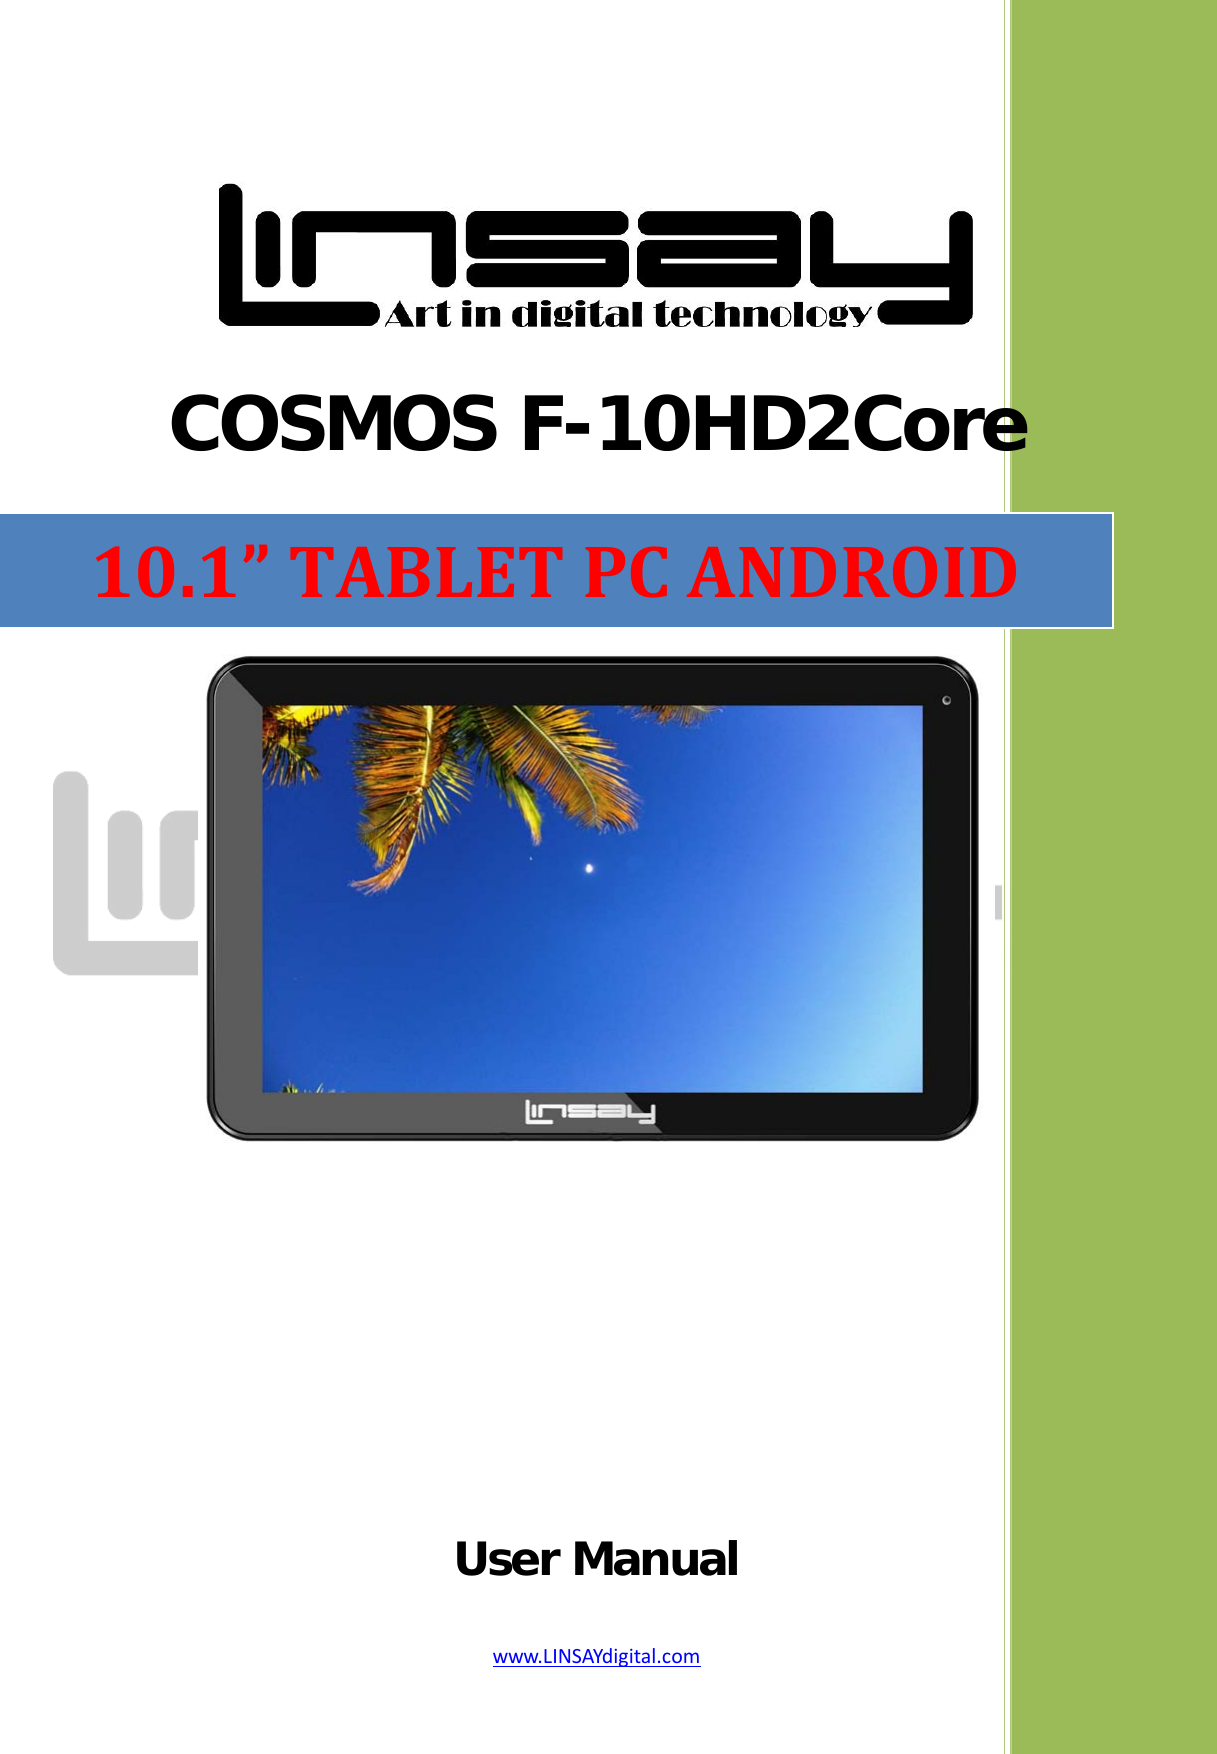  www.LINSAYdigital.com     COSMOS F-10HD2Core       User Manual 10.1” TABLET PC ANDROID 